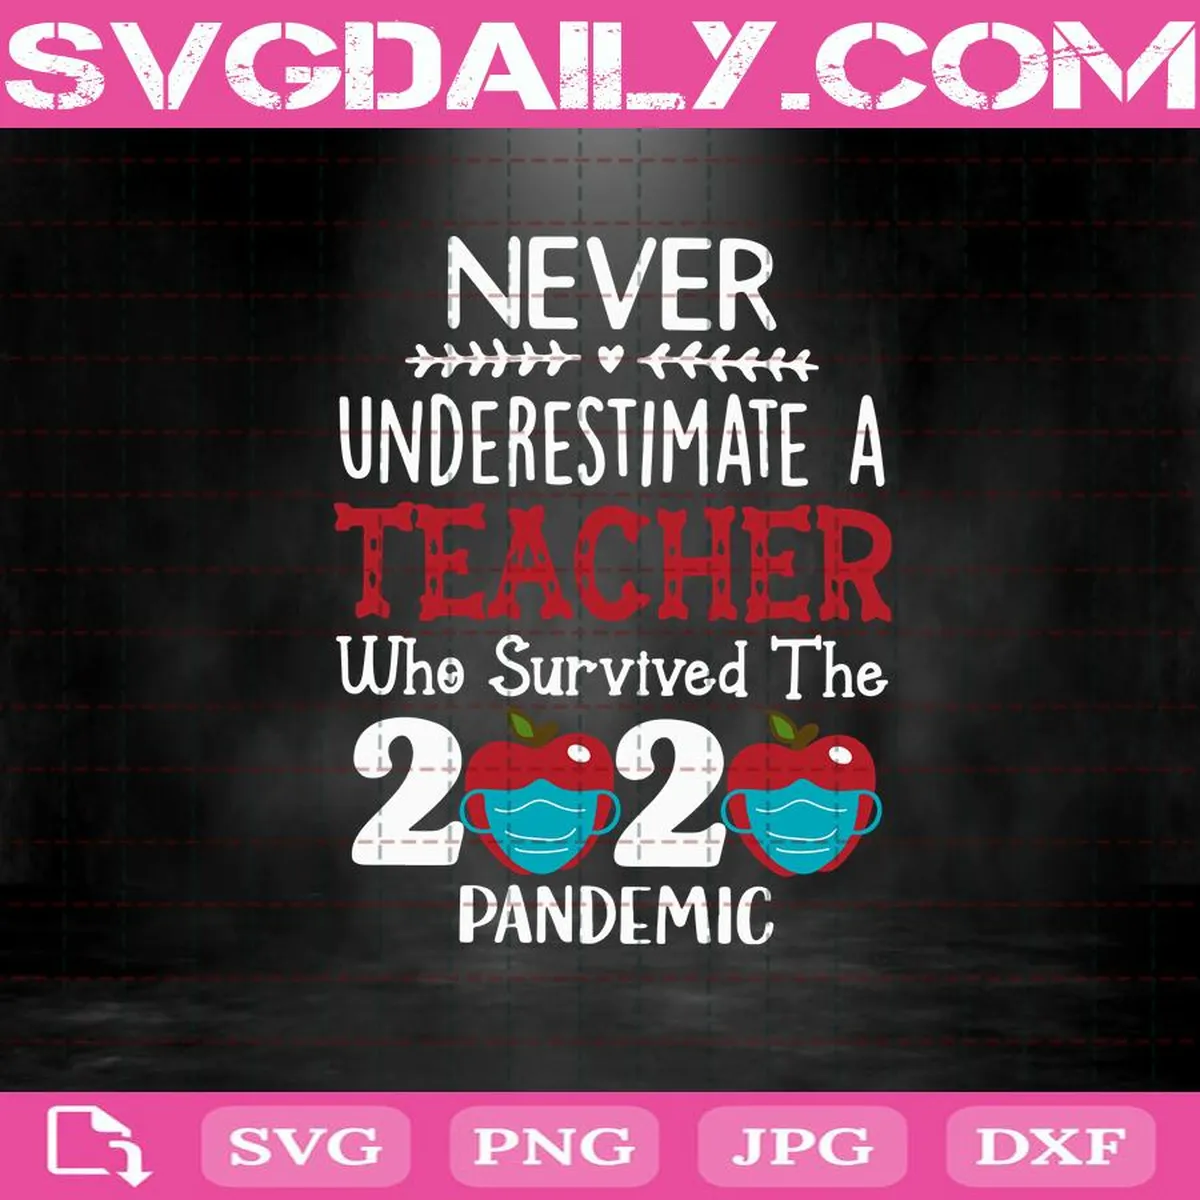 Never Underestimate A Teacher Who Survived The 2020 Pandemic Svg, Teacher Apple Svg, Teacher Svg, Coronavirus Pandemic Svg